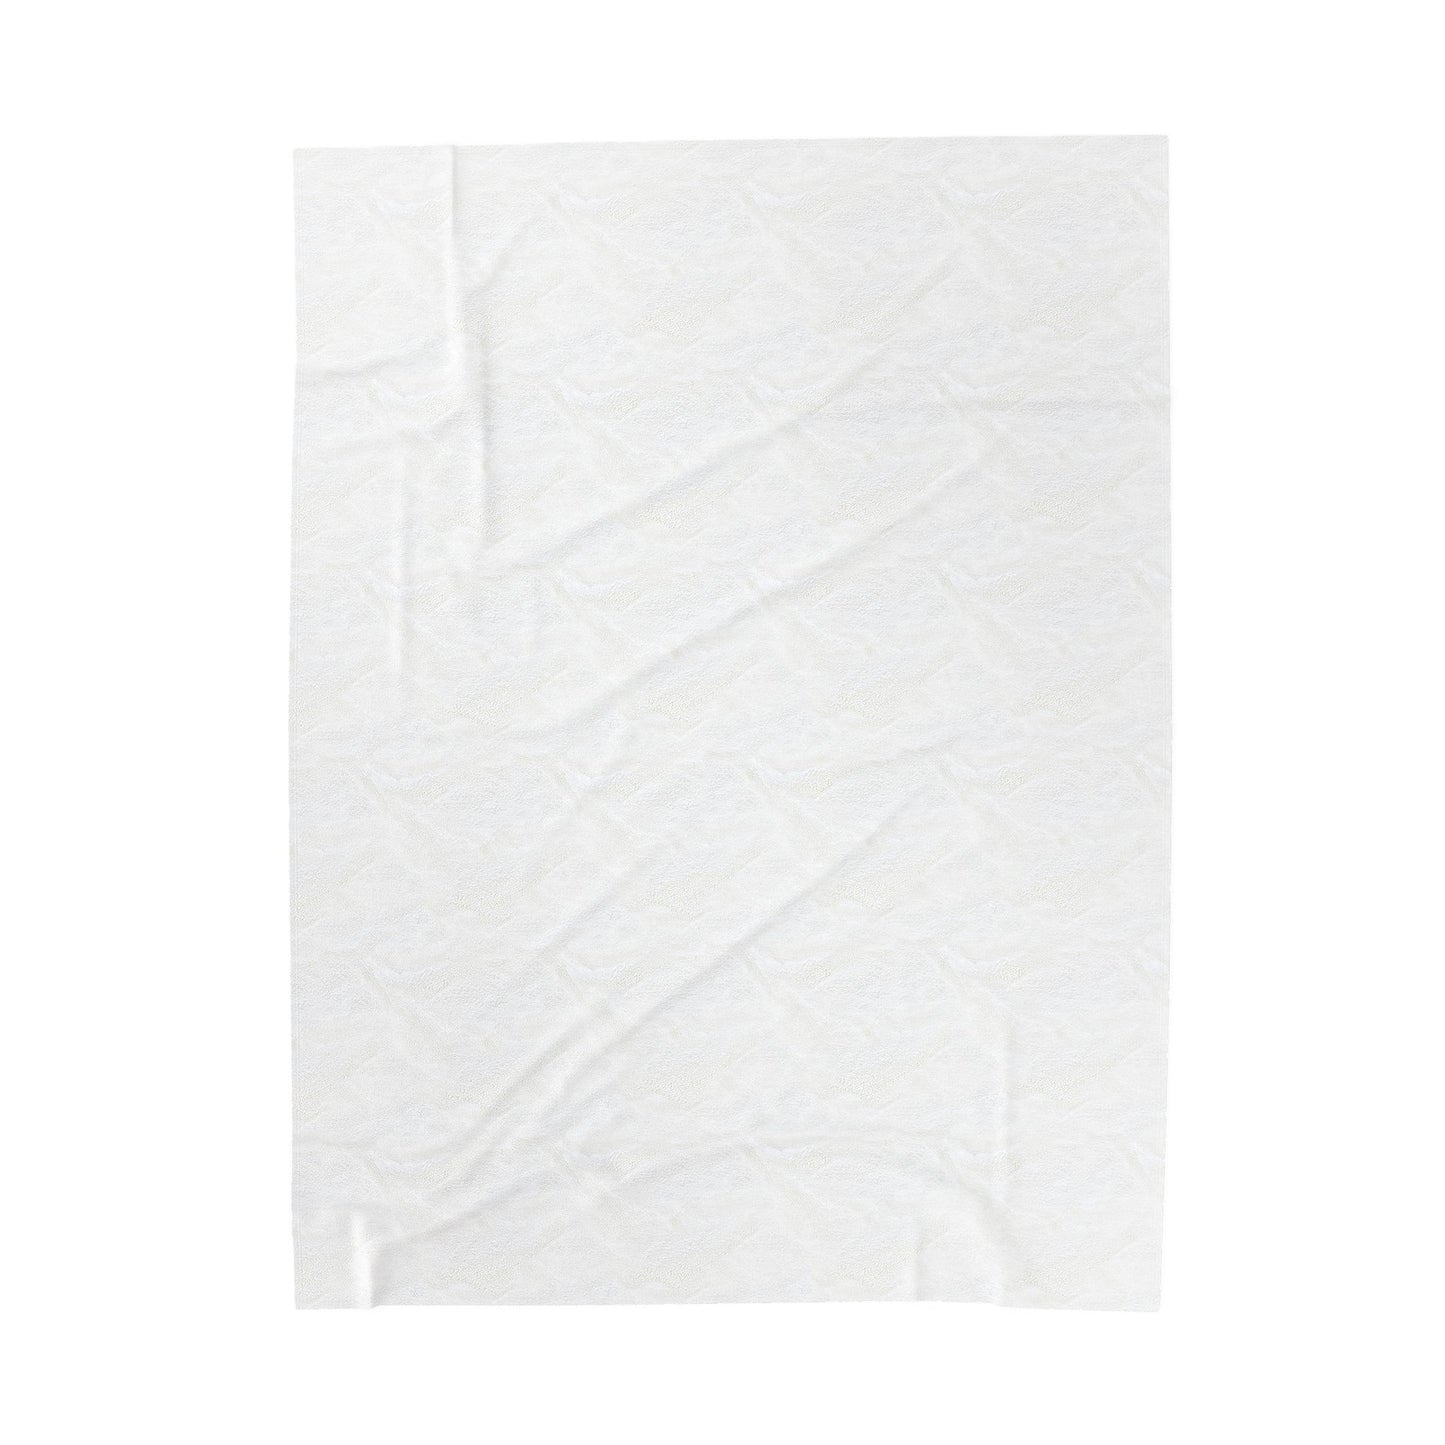 Kaleido47 Cymatic Velveteen Plush Blanket (LOTUS)